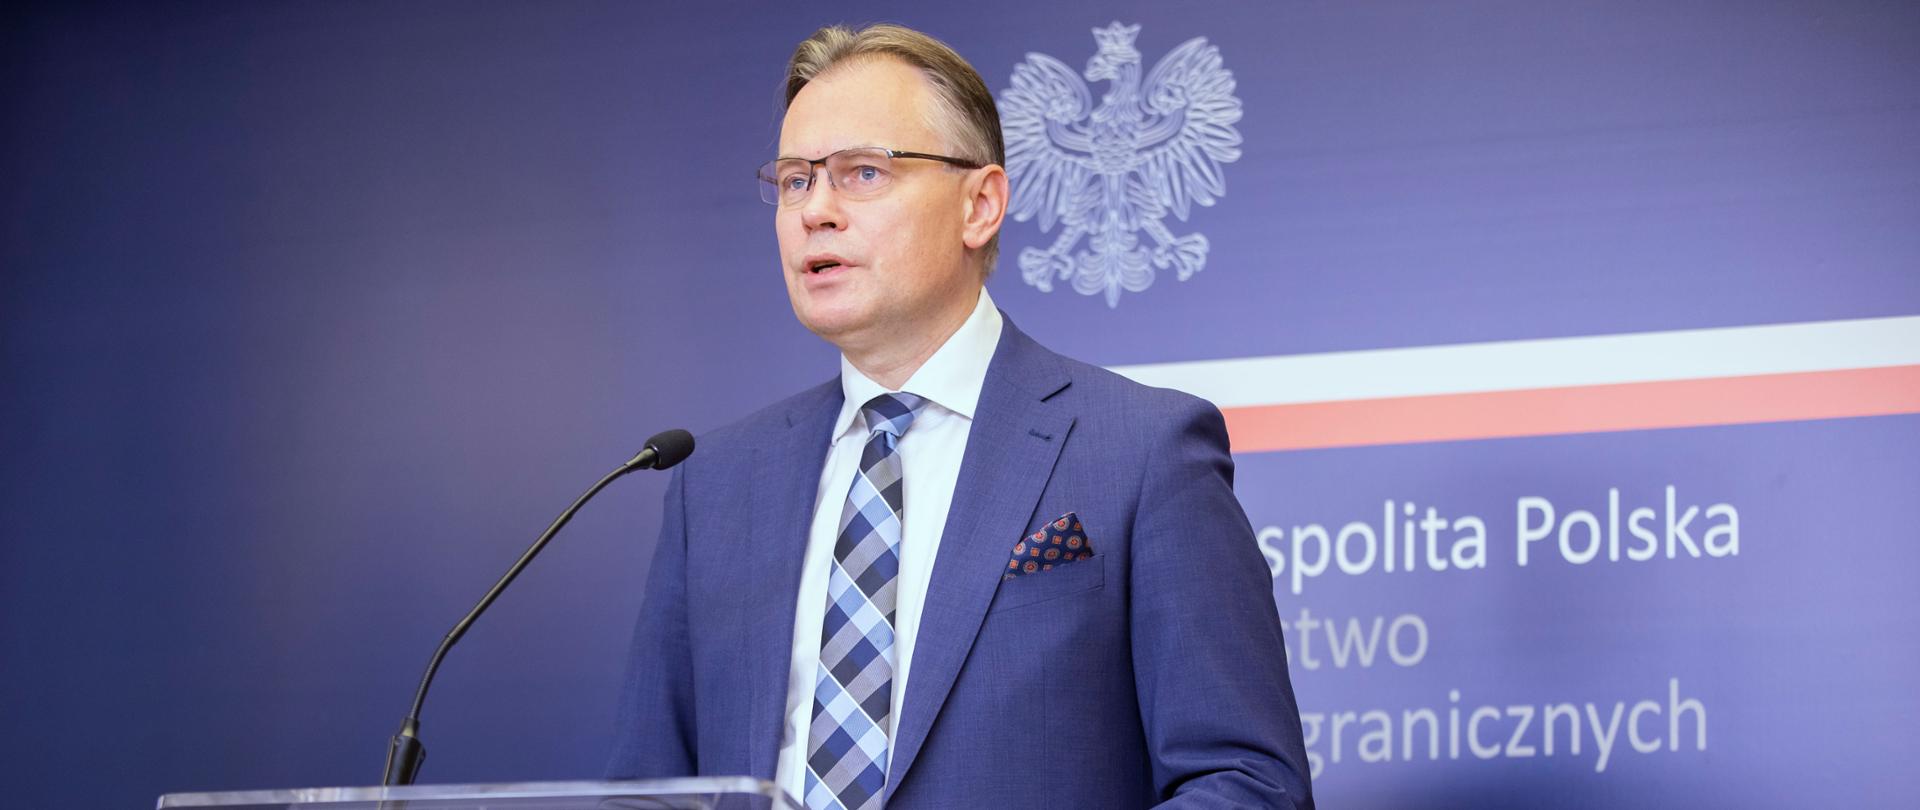 Deputy Minister of Foreign Affairs Arkadiusz Mularczyk